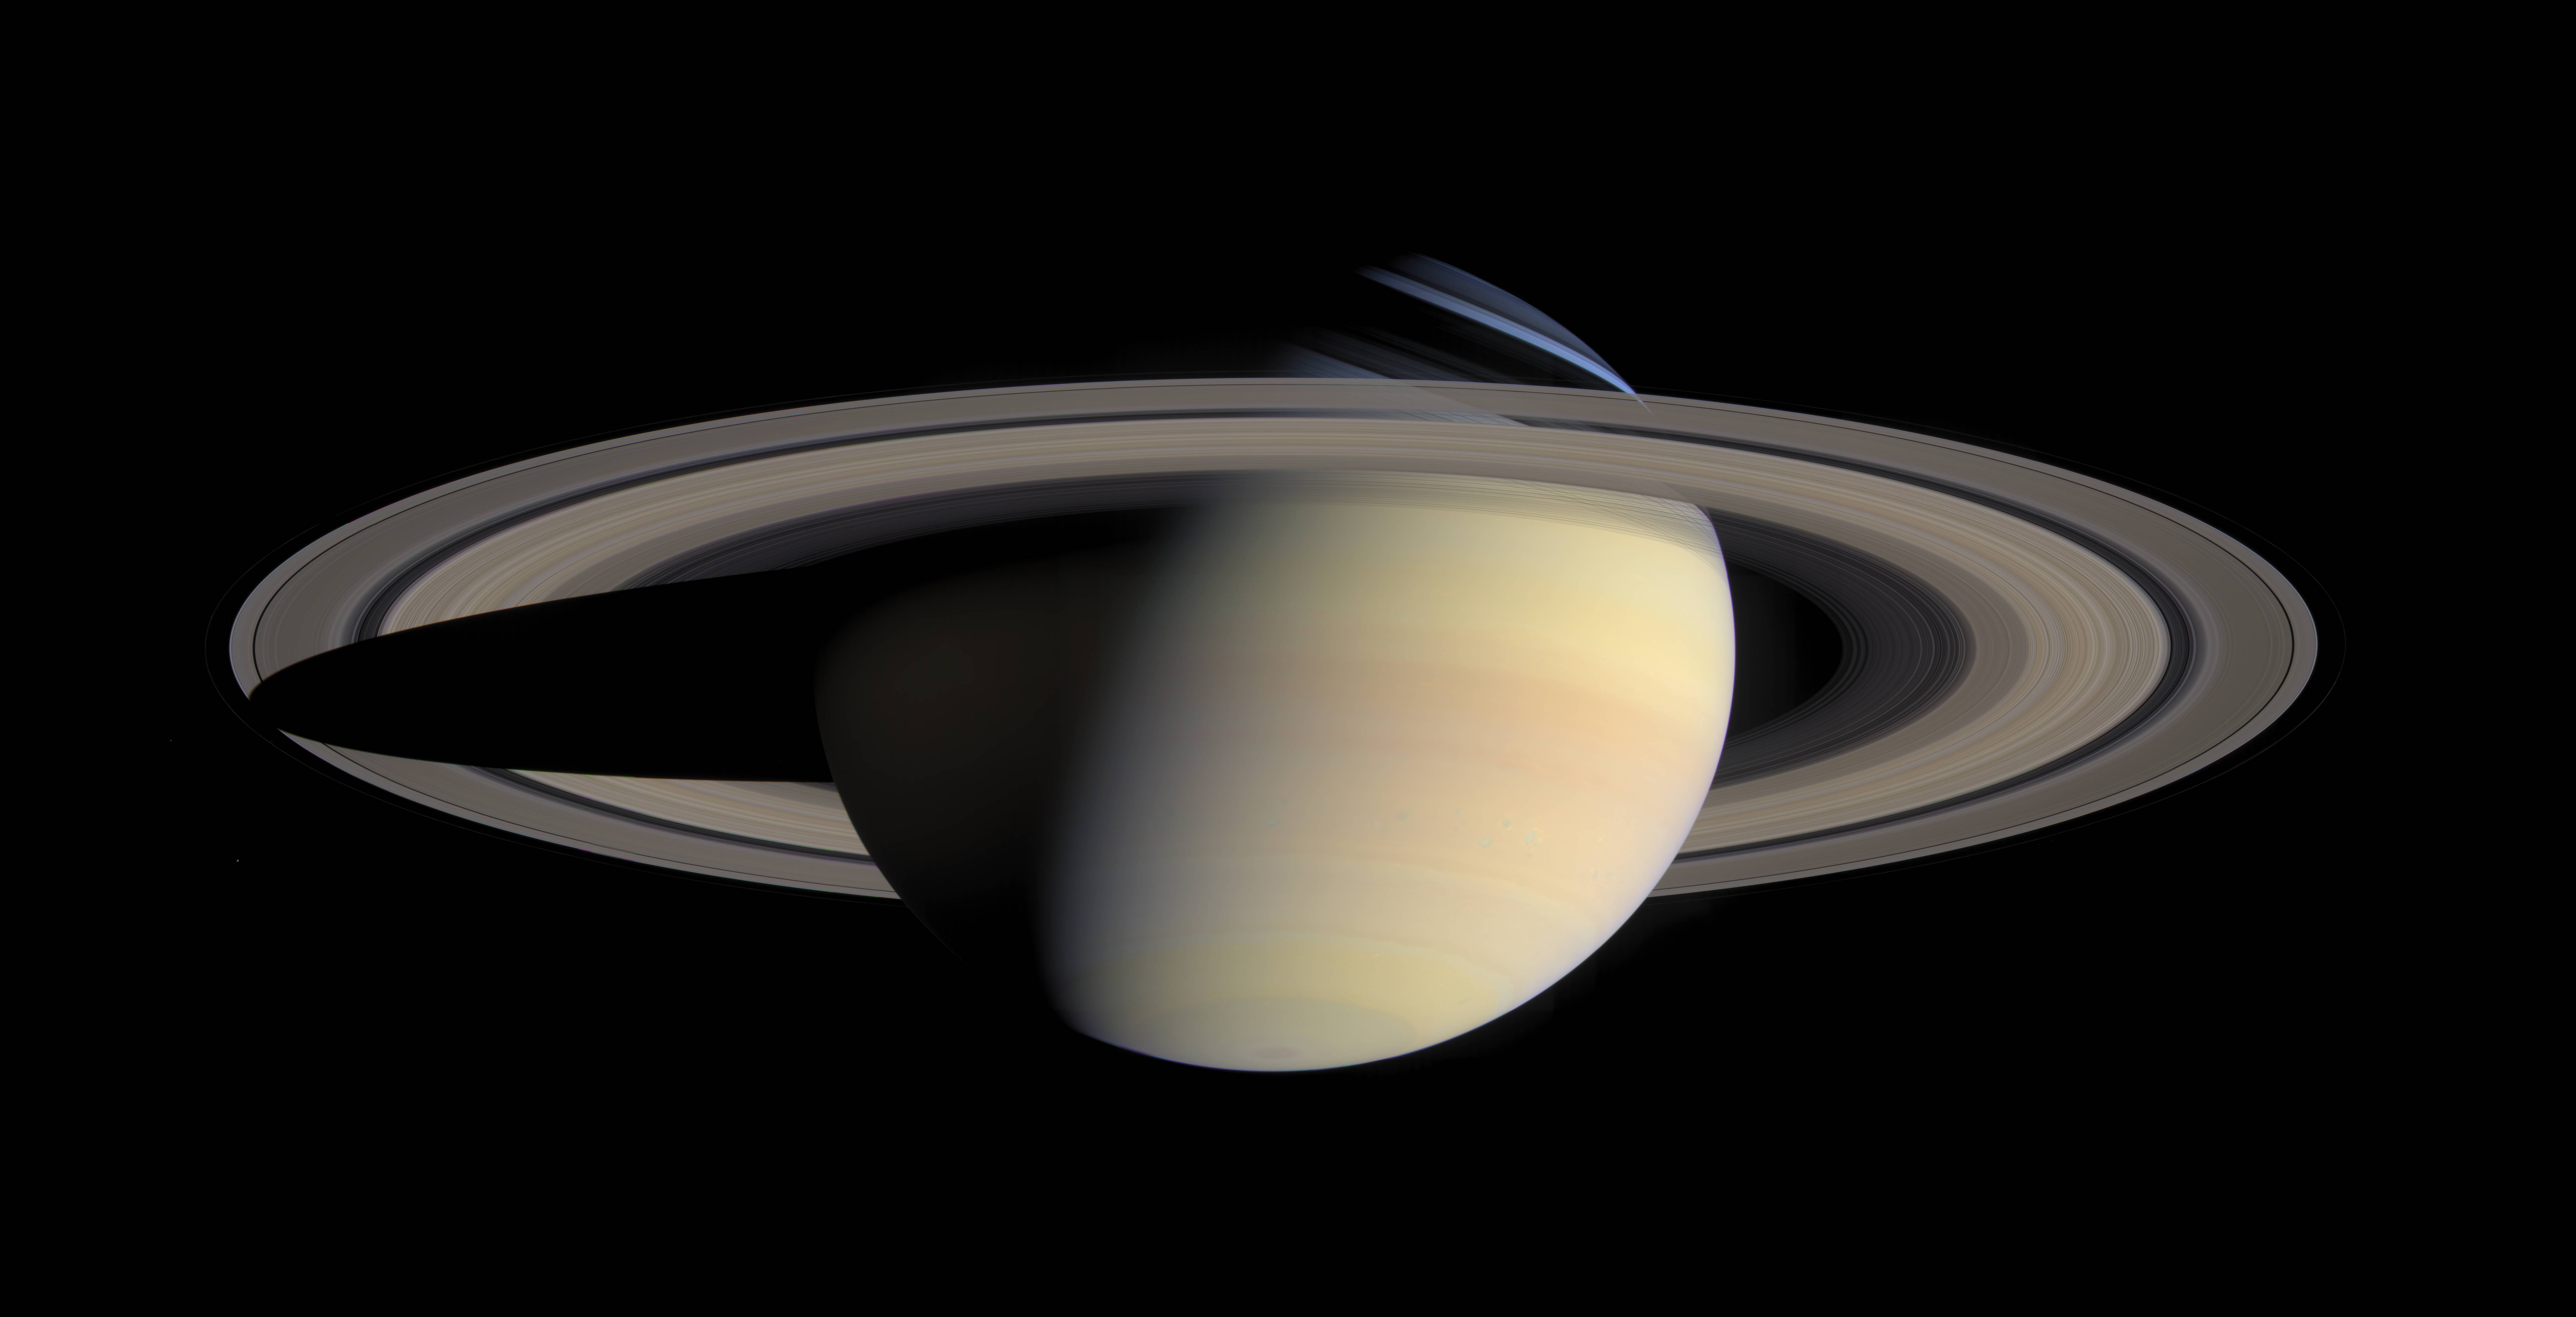 Saturn Planet - HD Wallpaper 